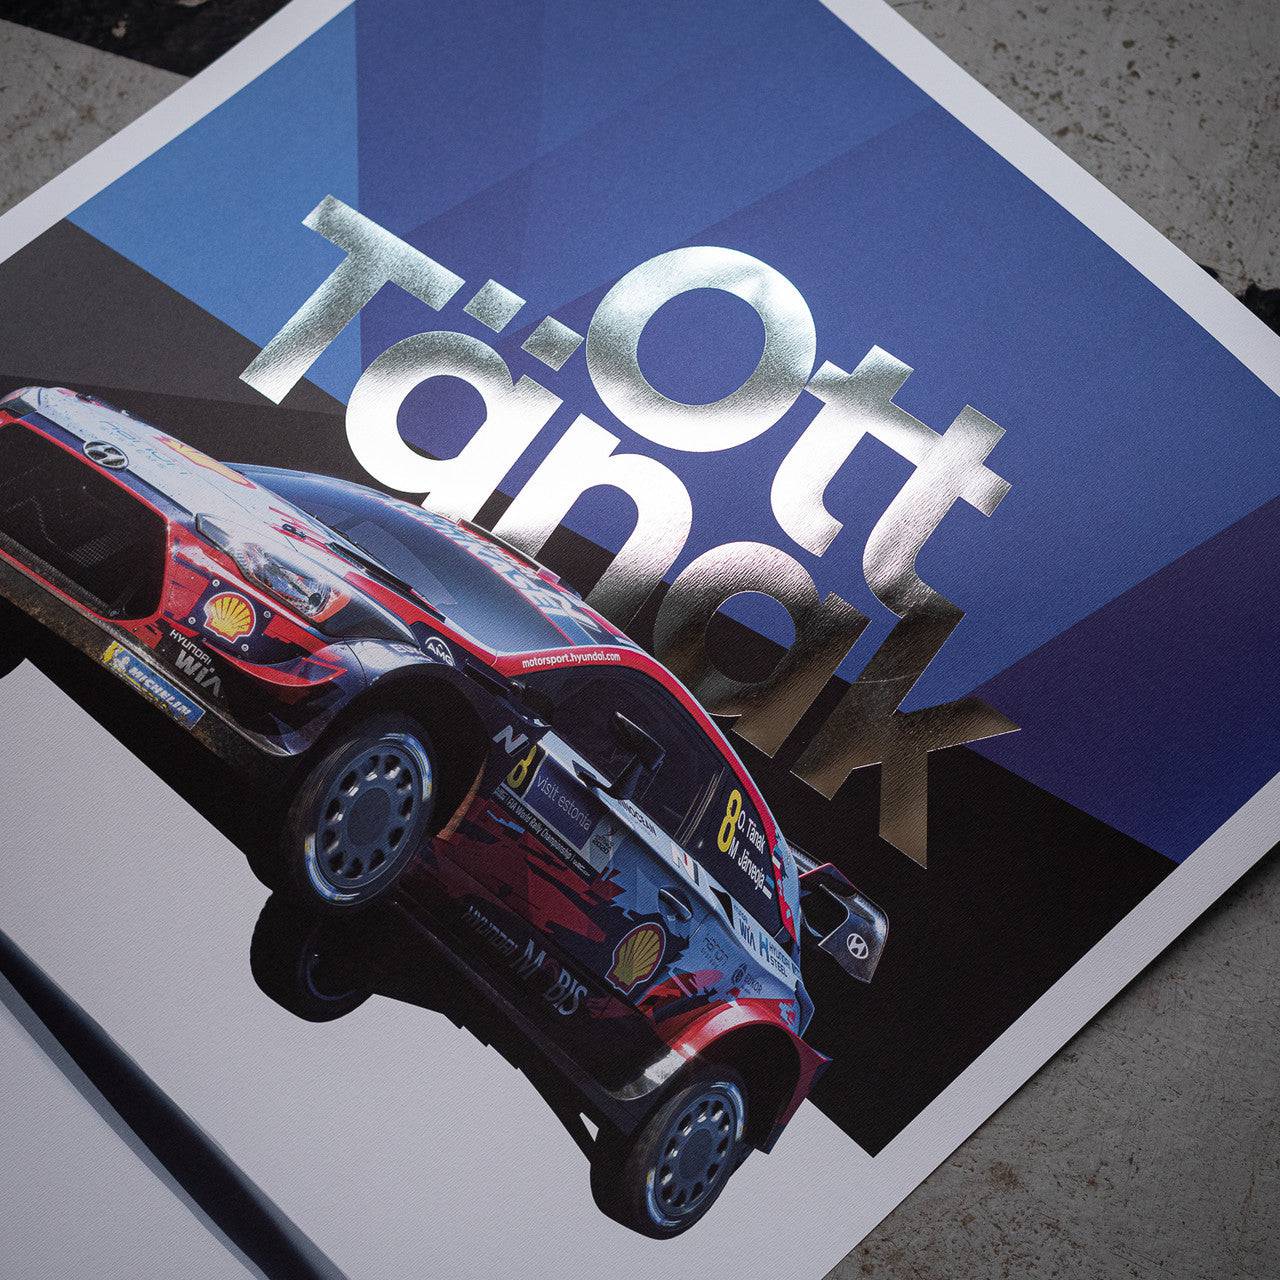 Hyundai Motorsport - Rally Estonia 2020 - Ott Tänak | Collector’s Edition